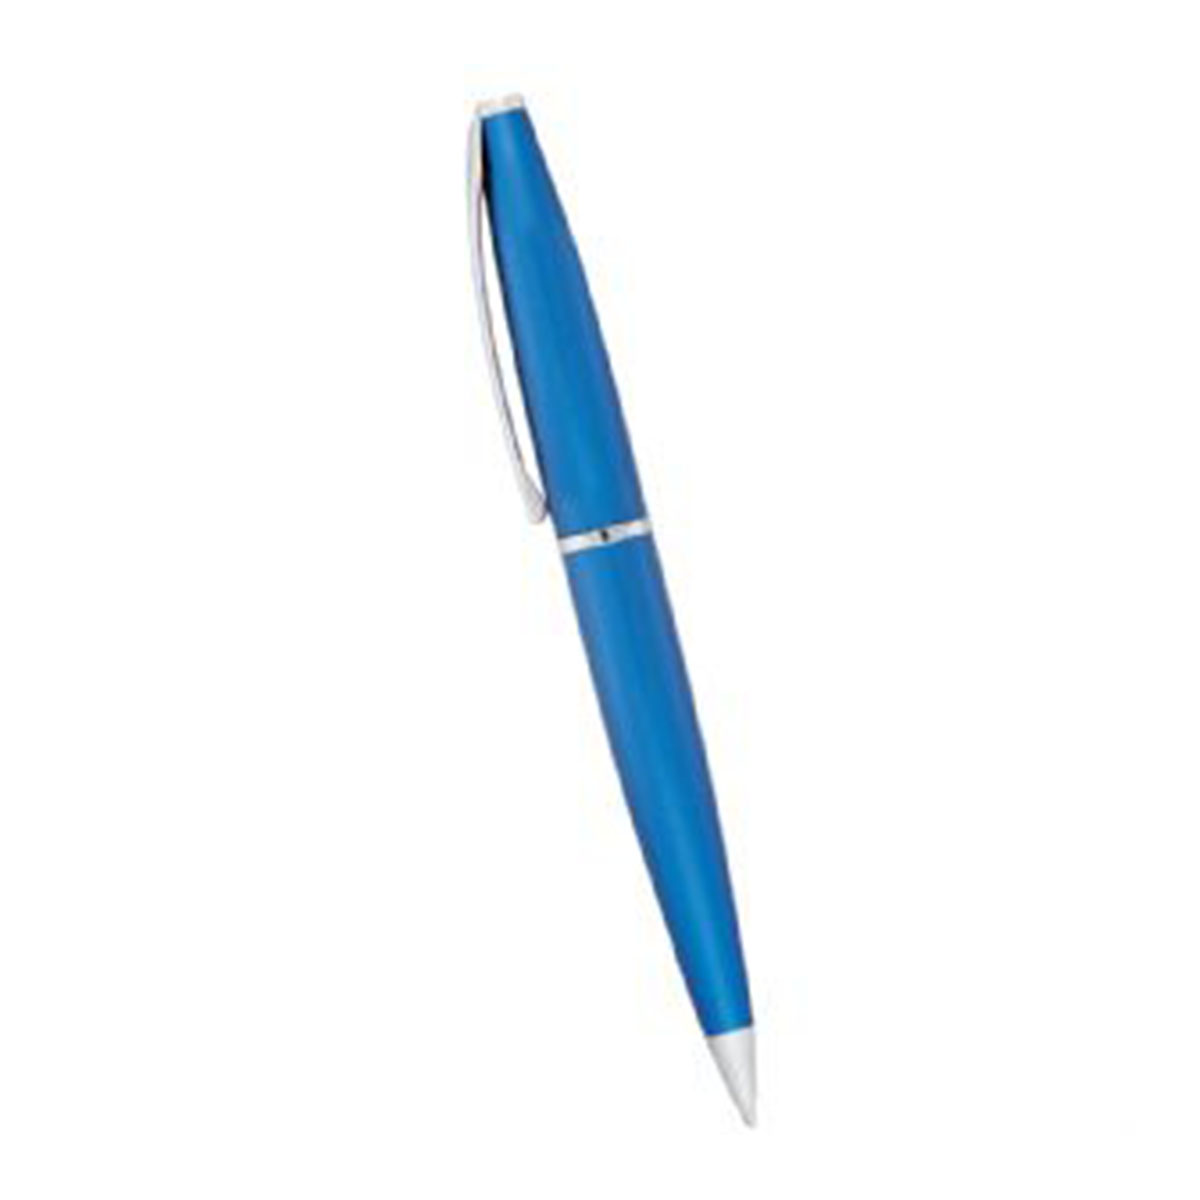 Grobisen Twist Action Ballpoint Pen-Blue with Silver Trim.